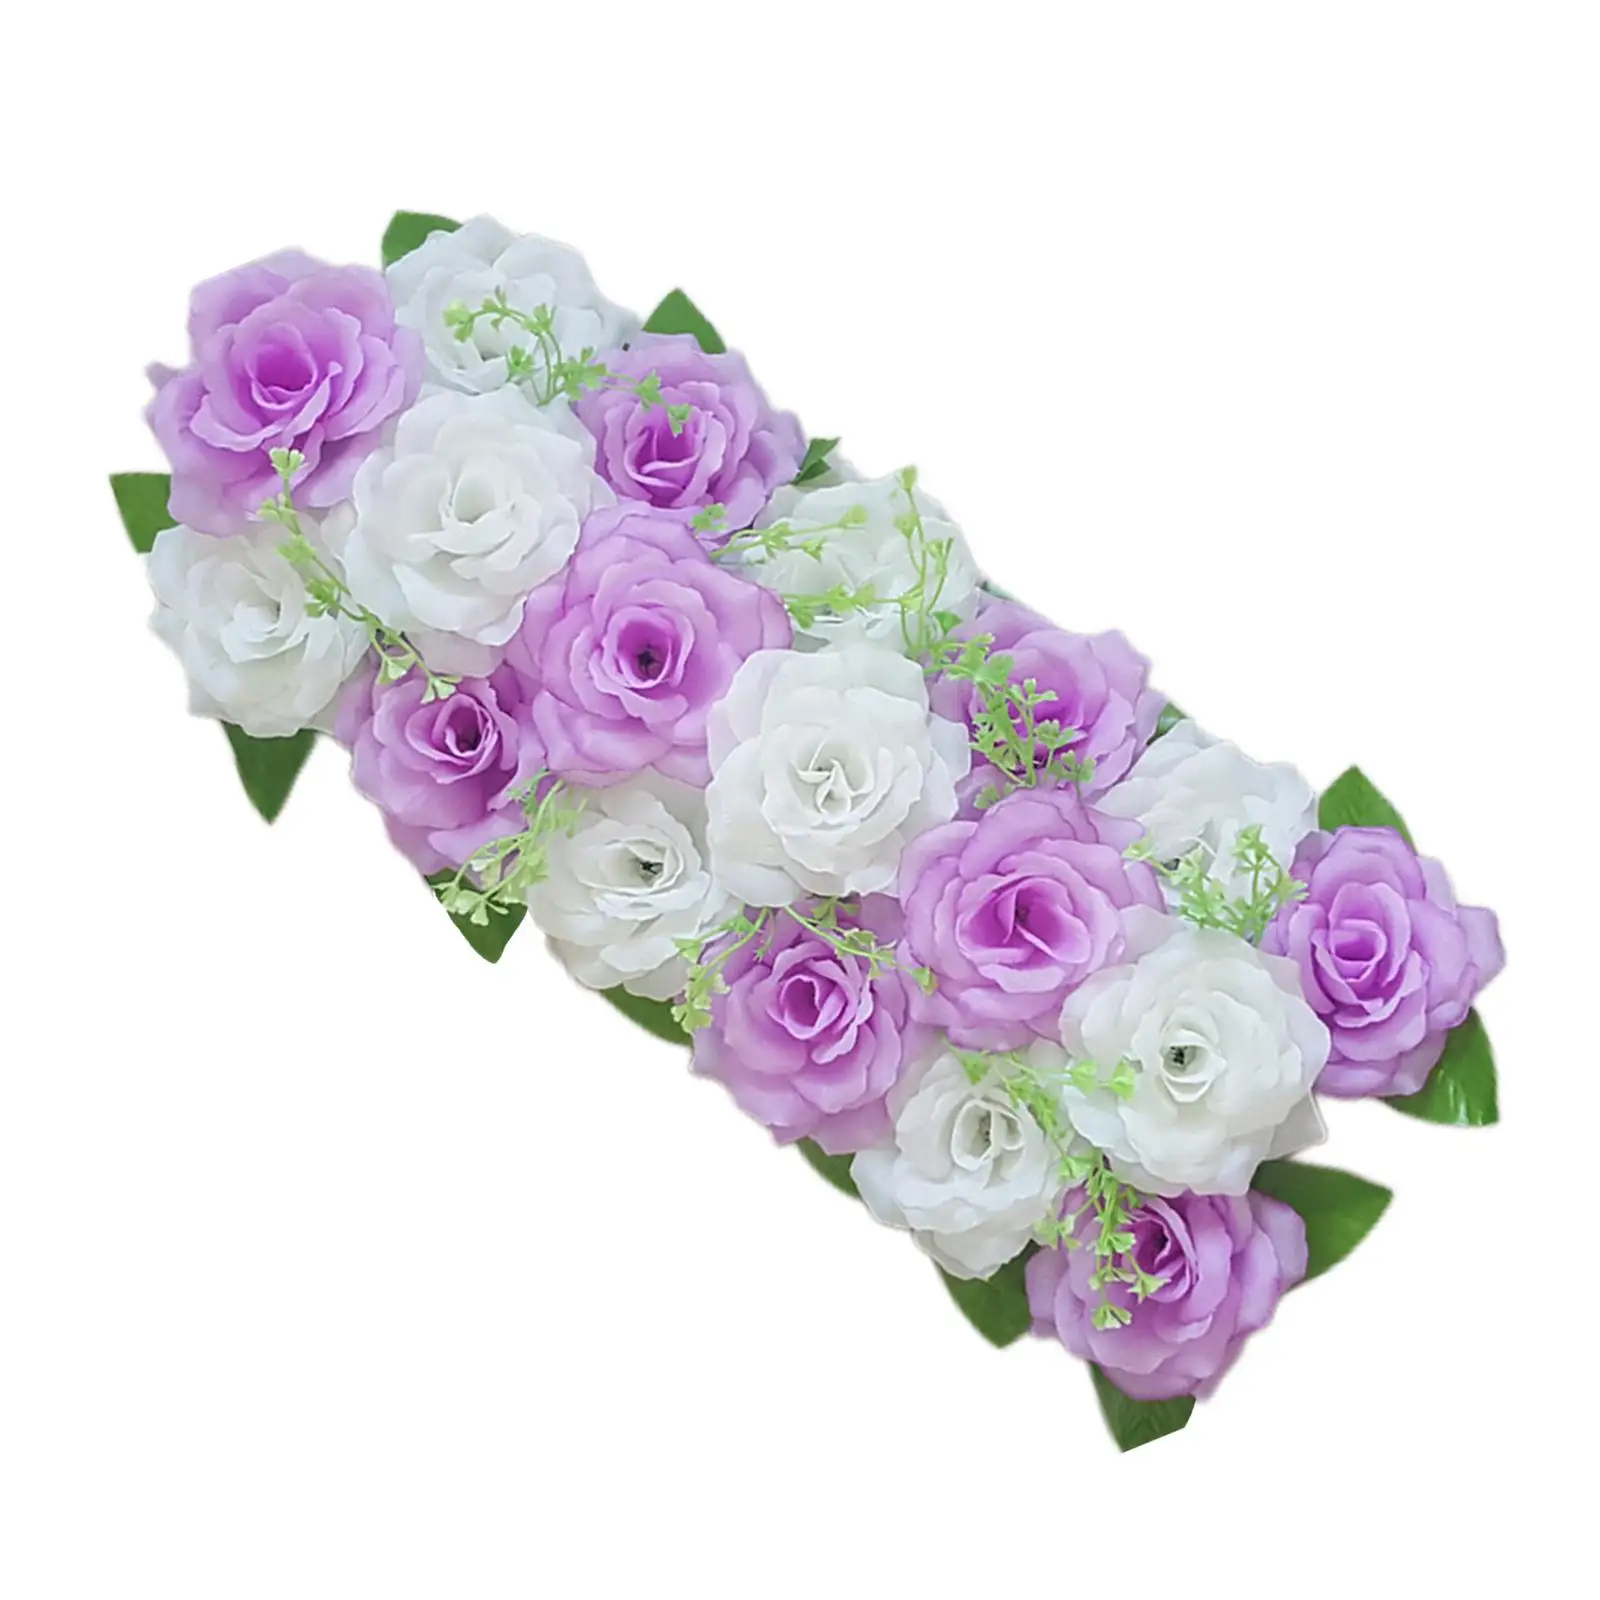 Artificial Rose Flower Panel Road Cited Flowers Flower Arrangements Bouquet for